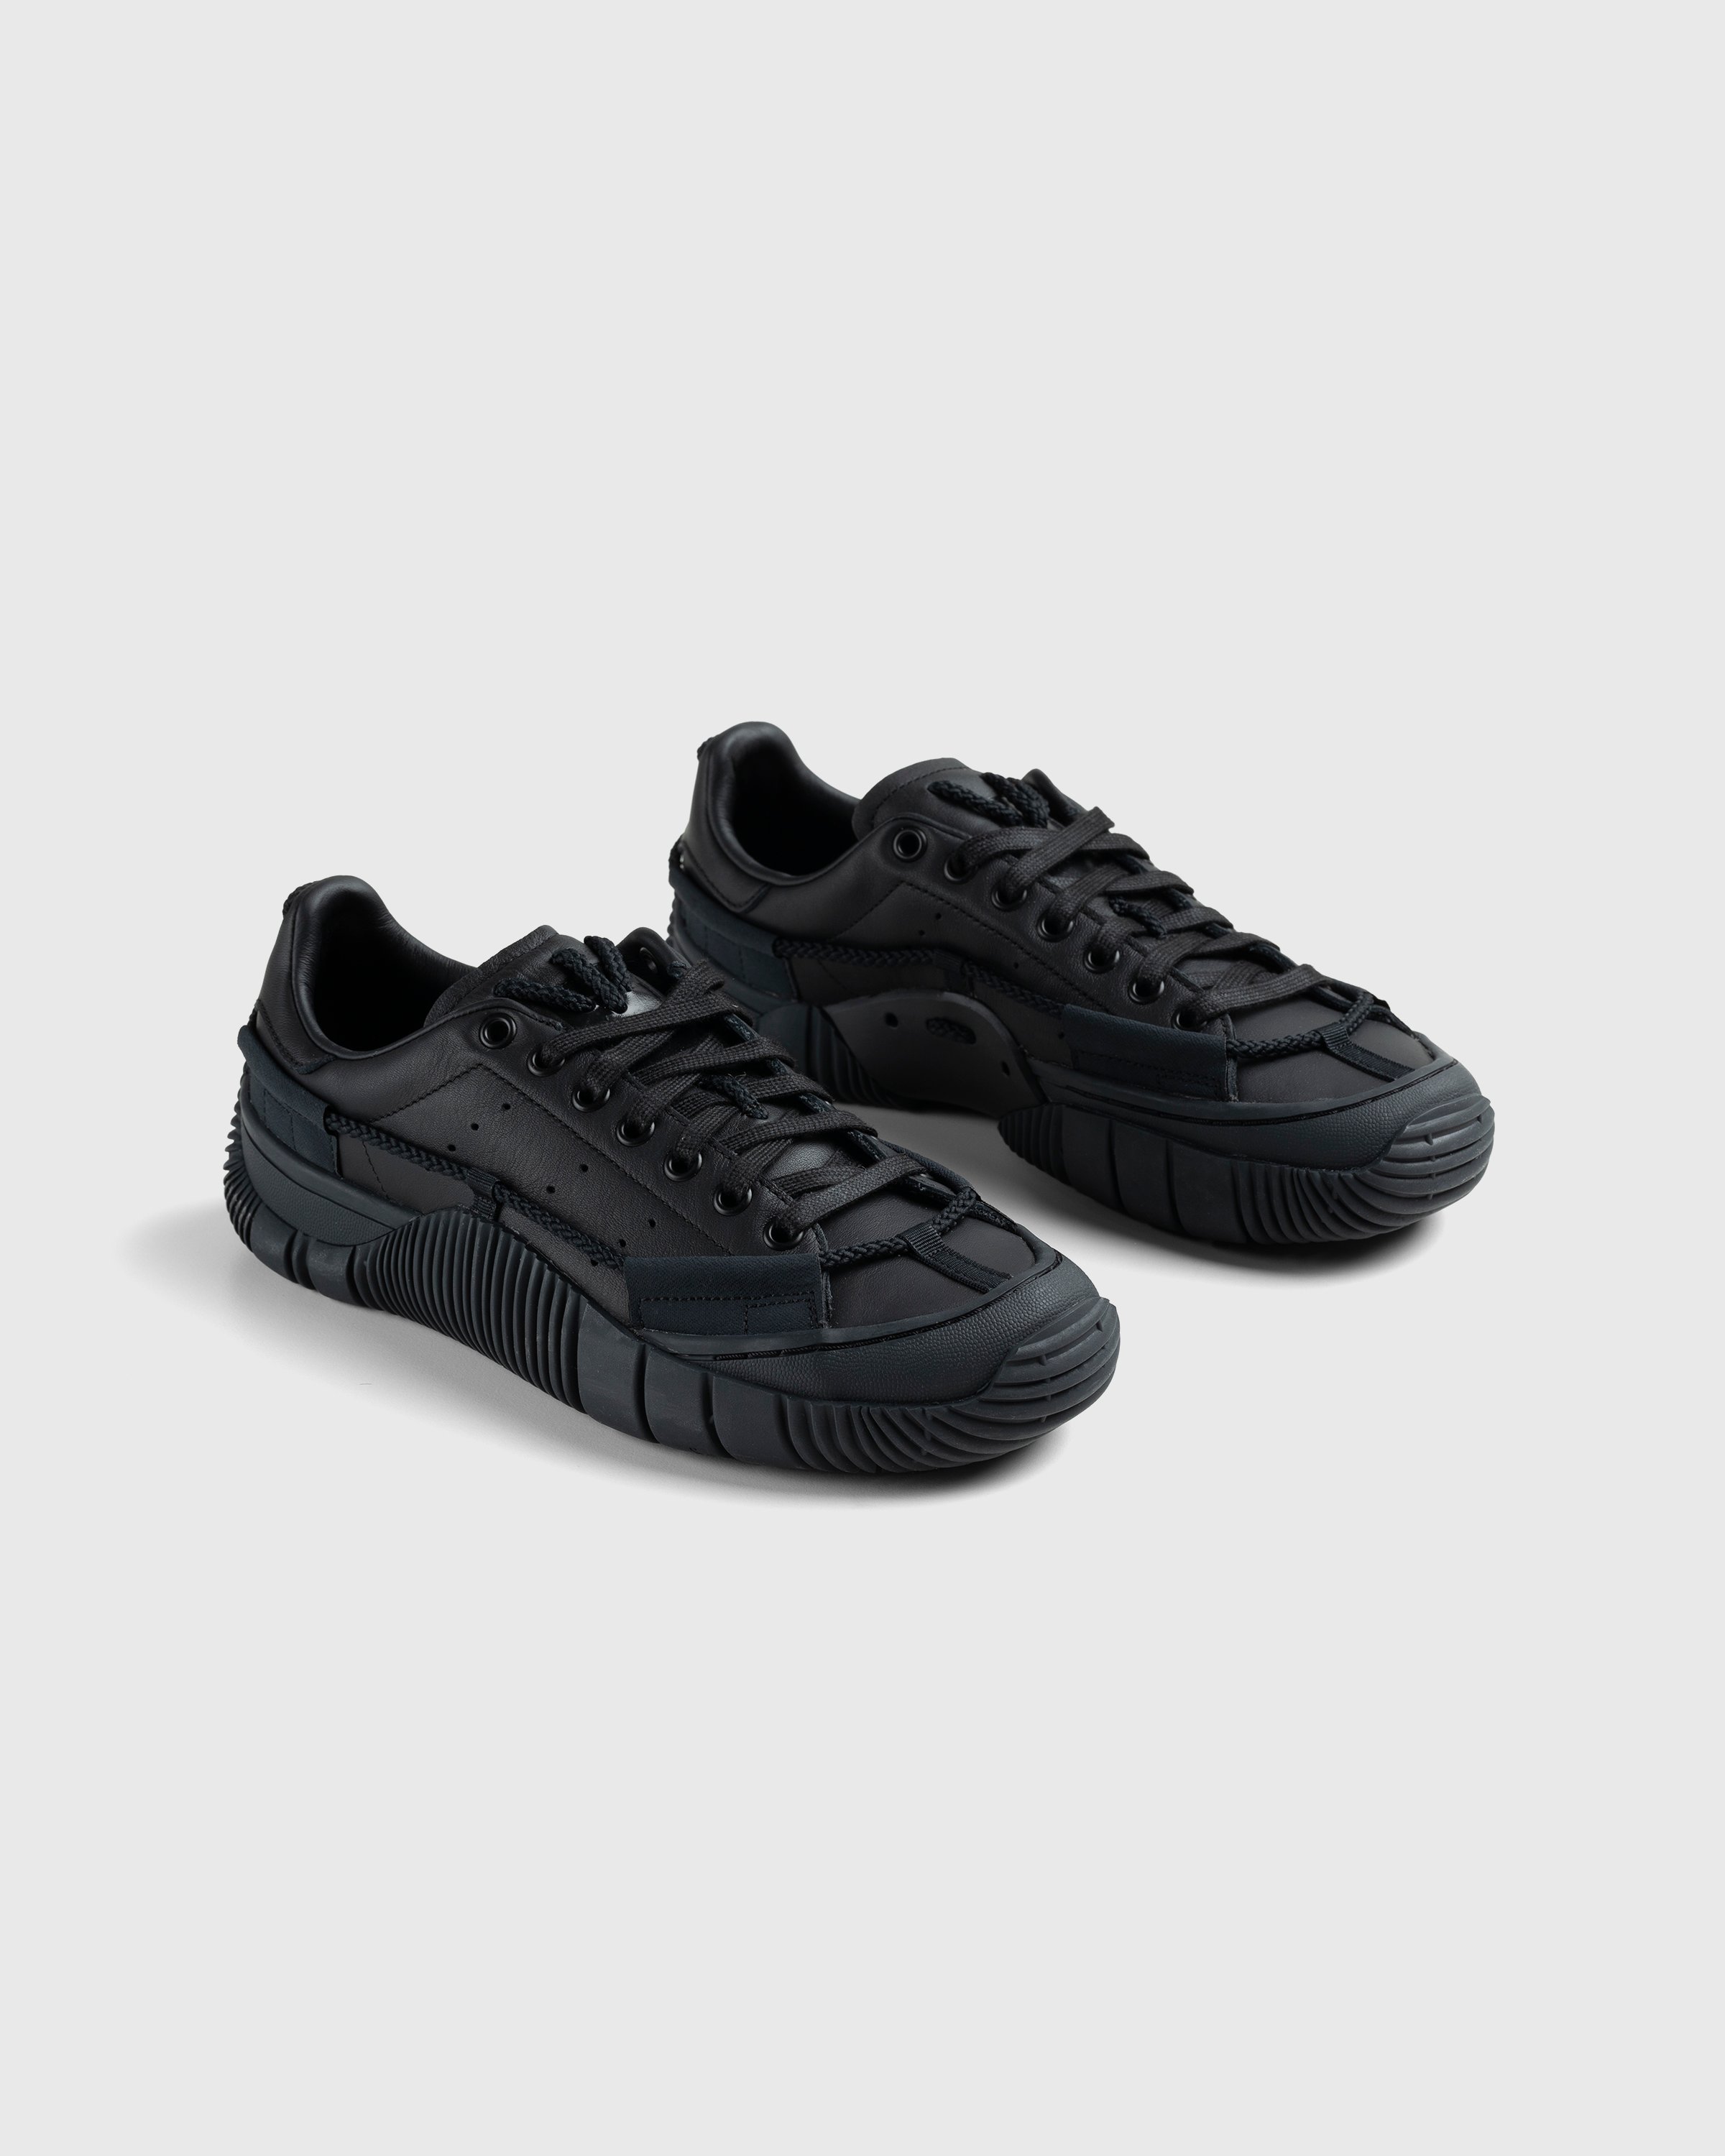 Adidas x Craig Green - Scuba Stan Black - Footwear - Black - Image 3